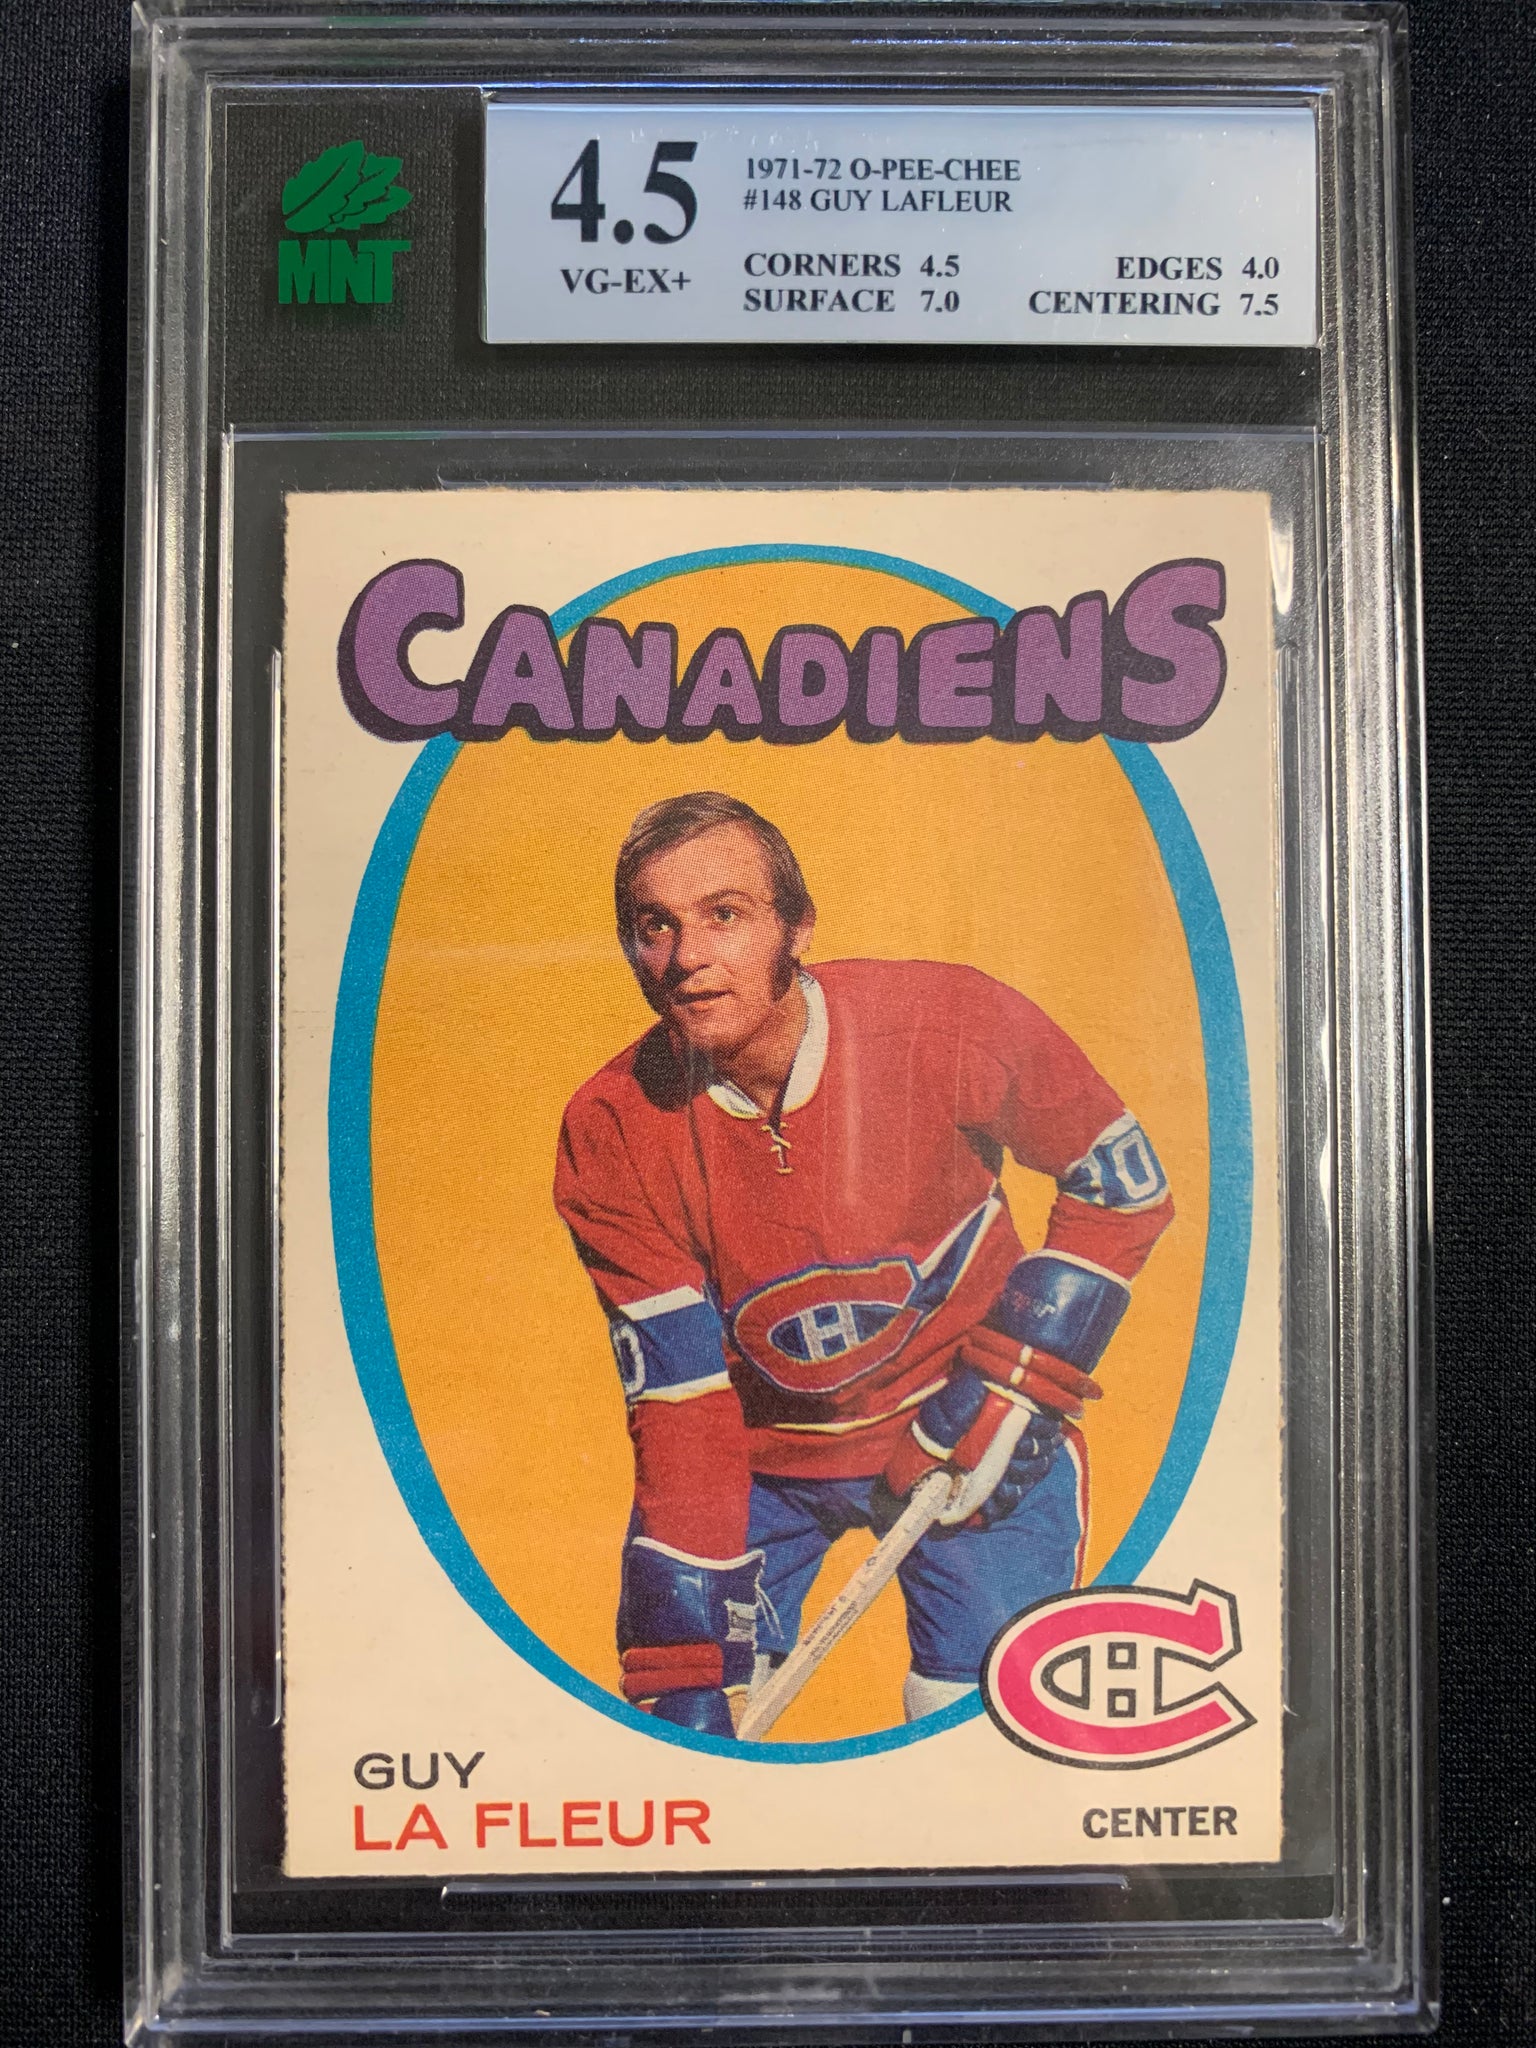 1971-72 OPC HOCKEY #148 MONTREAL CANADIENS - GUY LAFLEUR ROOKIE CARD GRADED MNT 4.5